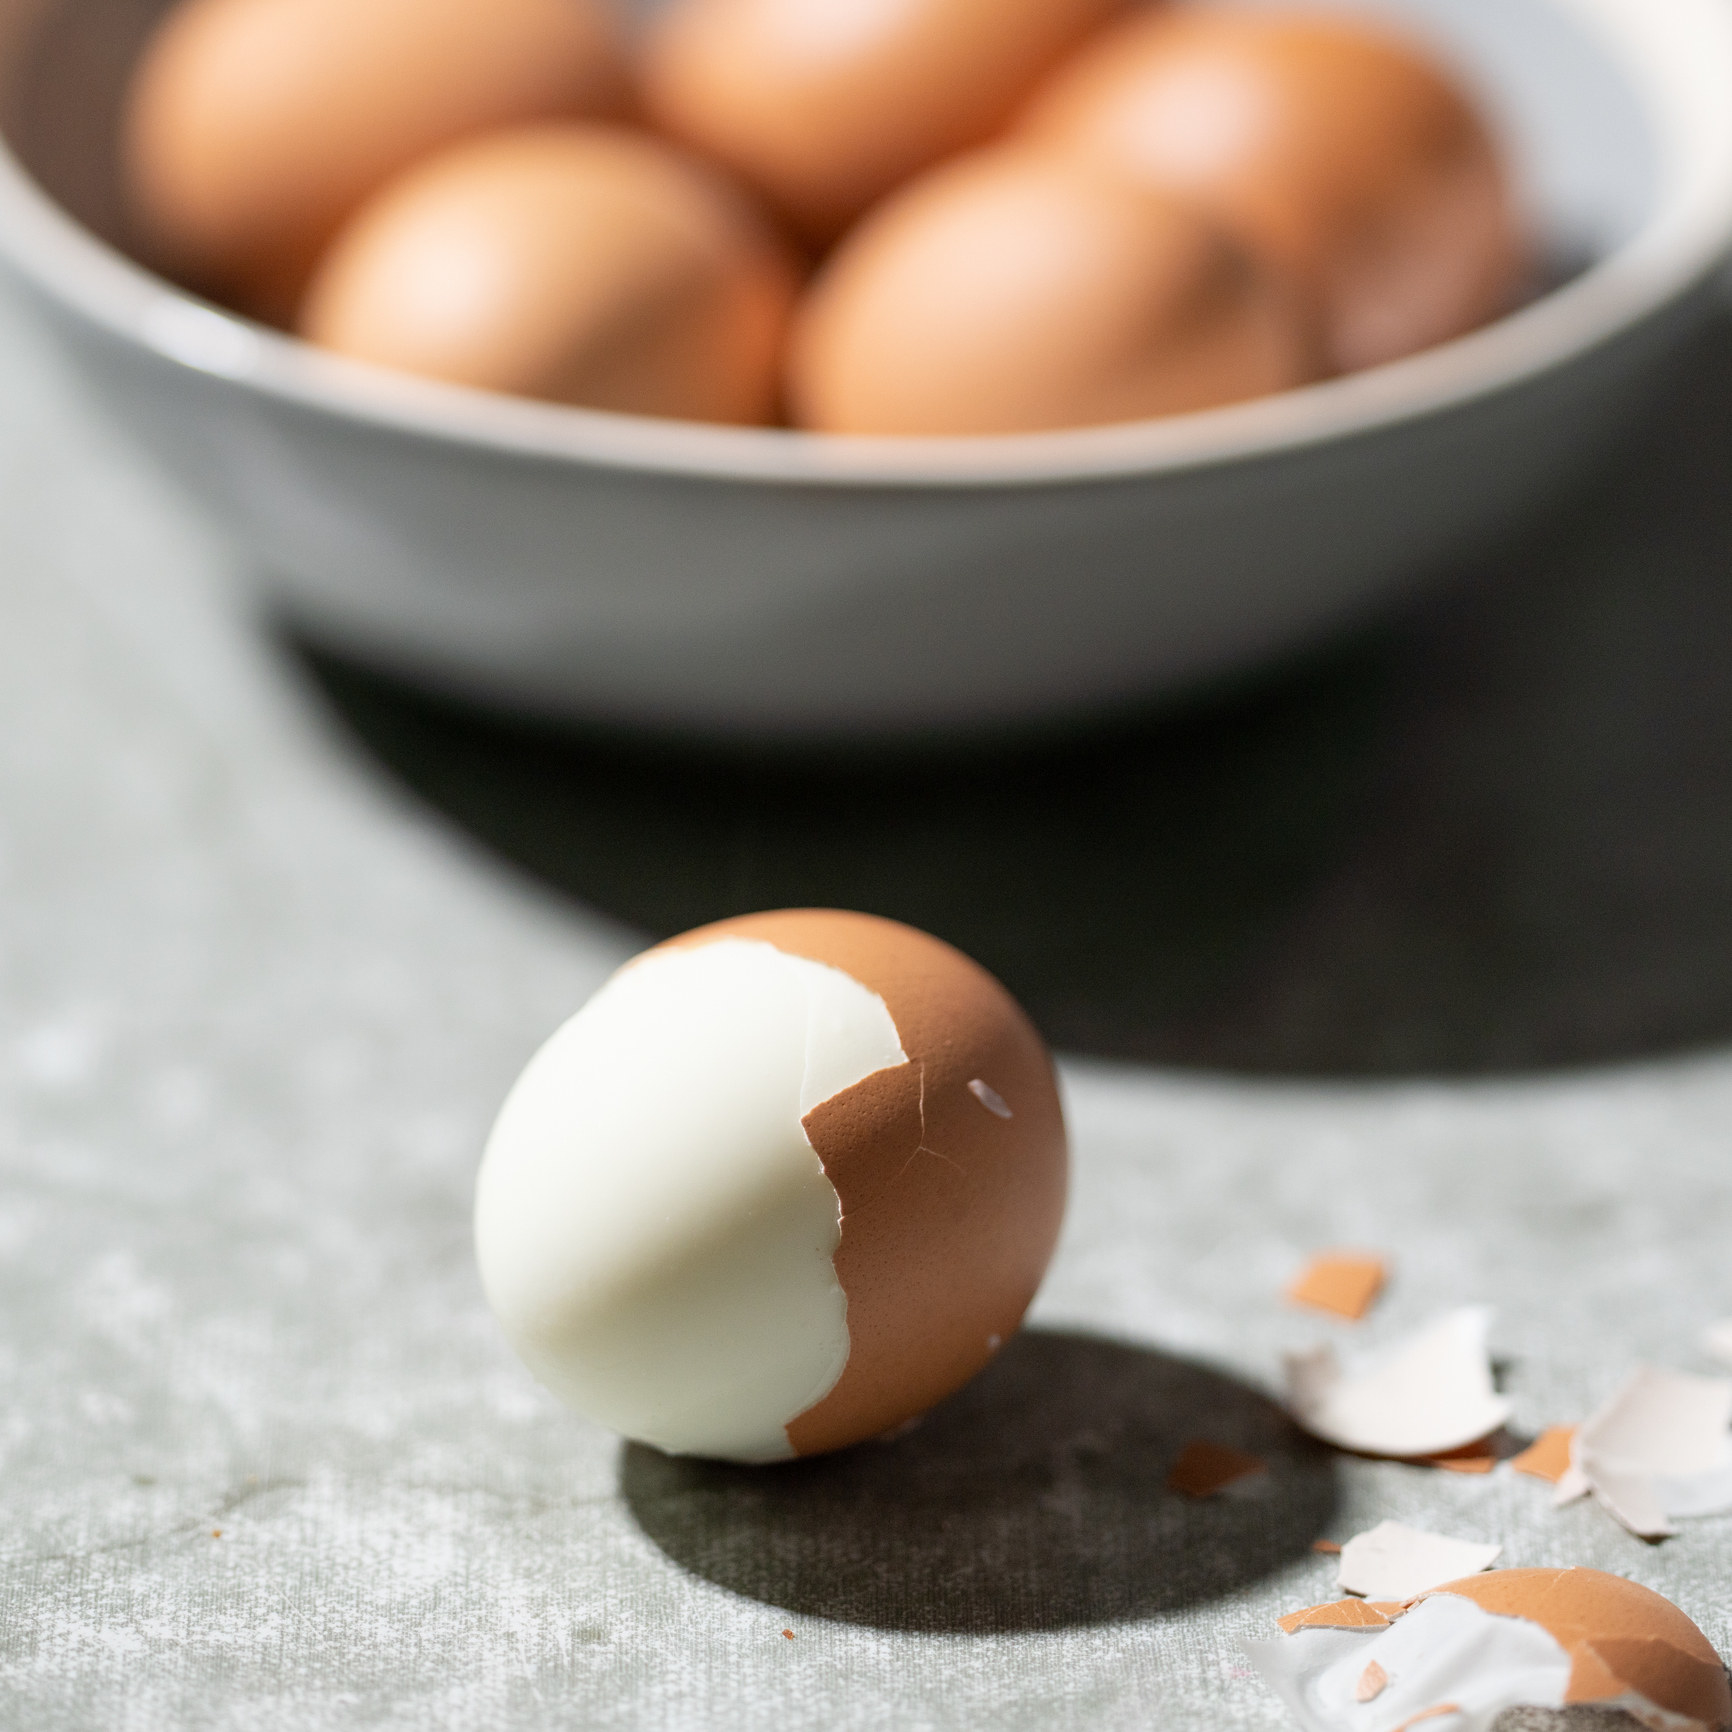 Partially peeled hard-boiled egg.